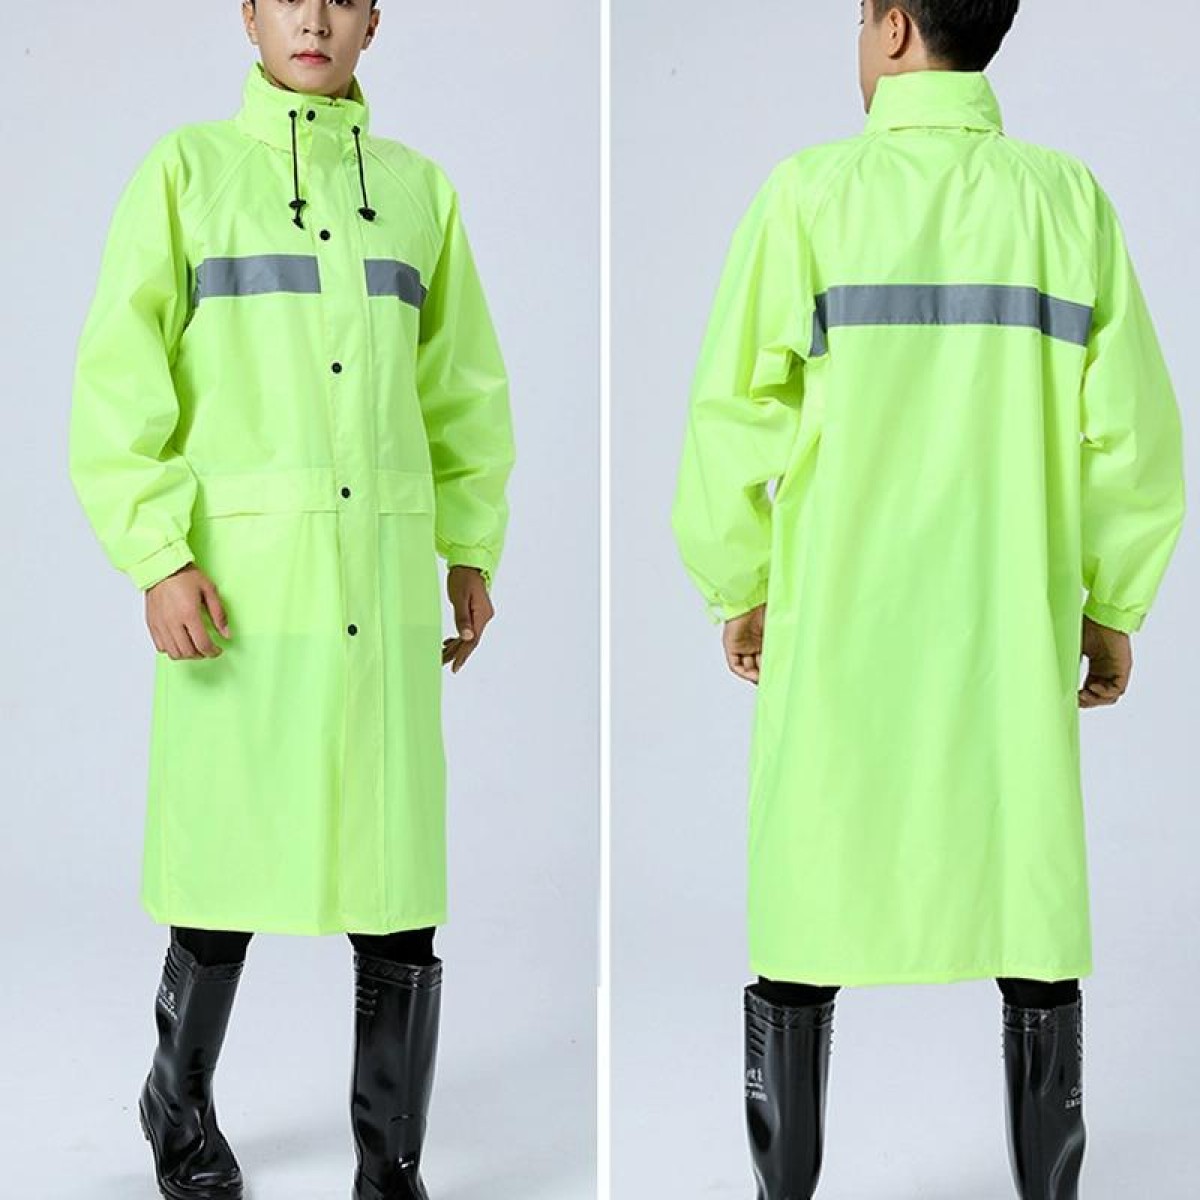 X18 Siamese Raincoat Outdoor Adult Reflective Riding Raincoat, Size: XXXL(Fluorescent Green)